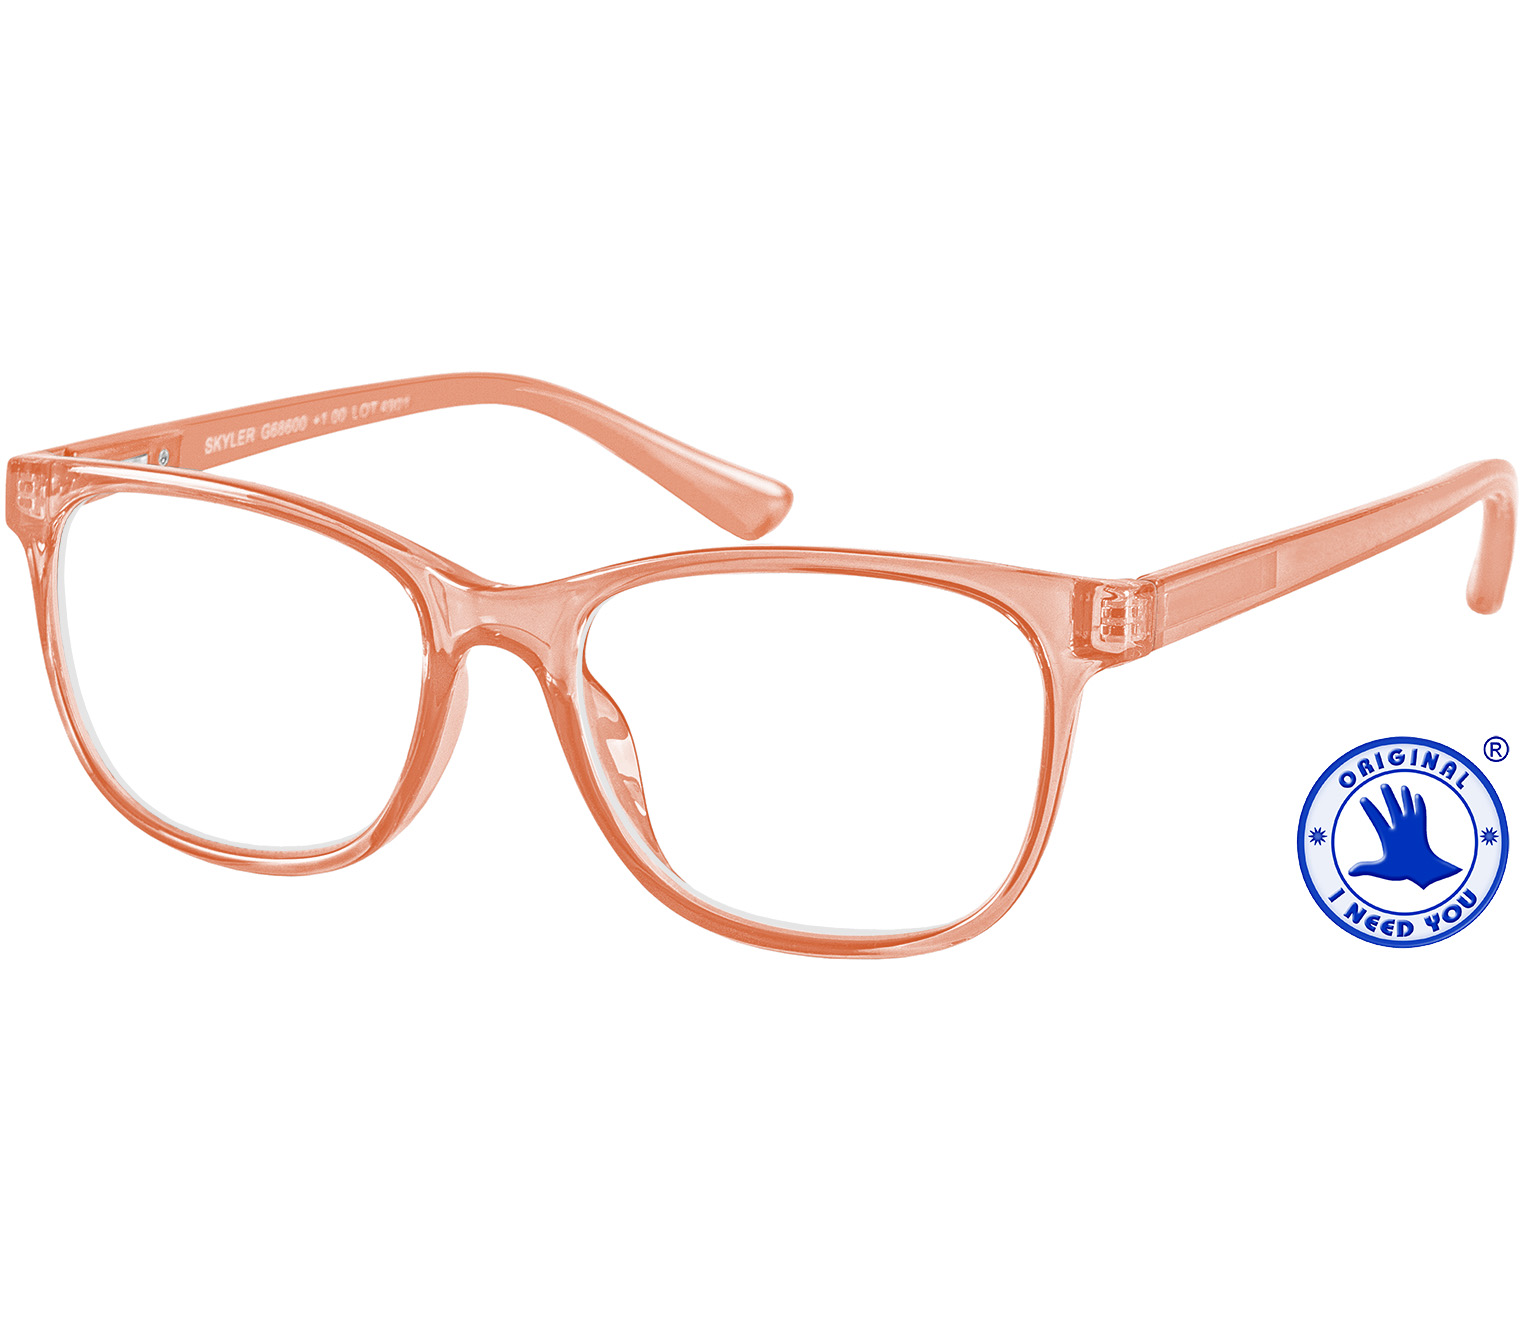 Main Image (Angle) - Bella (Orange) Reading Glasses